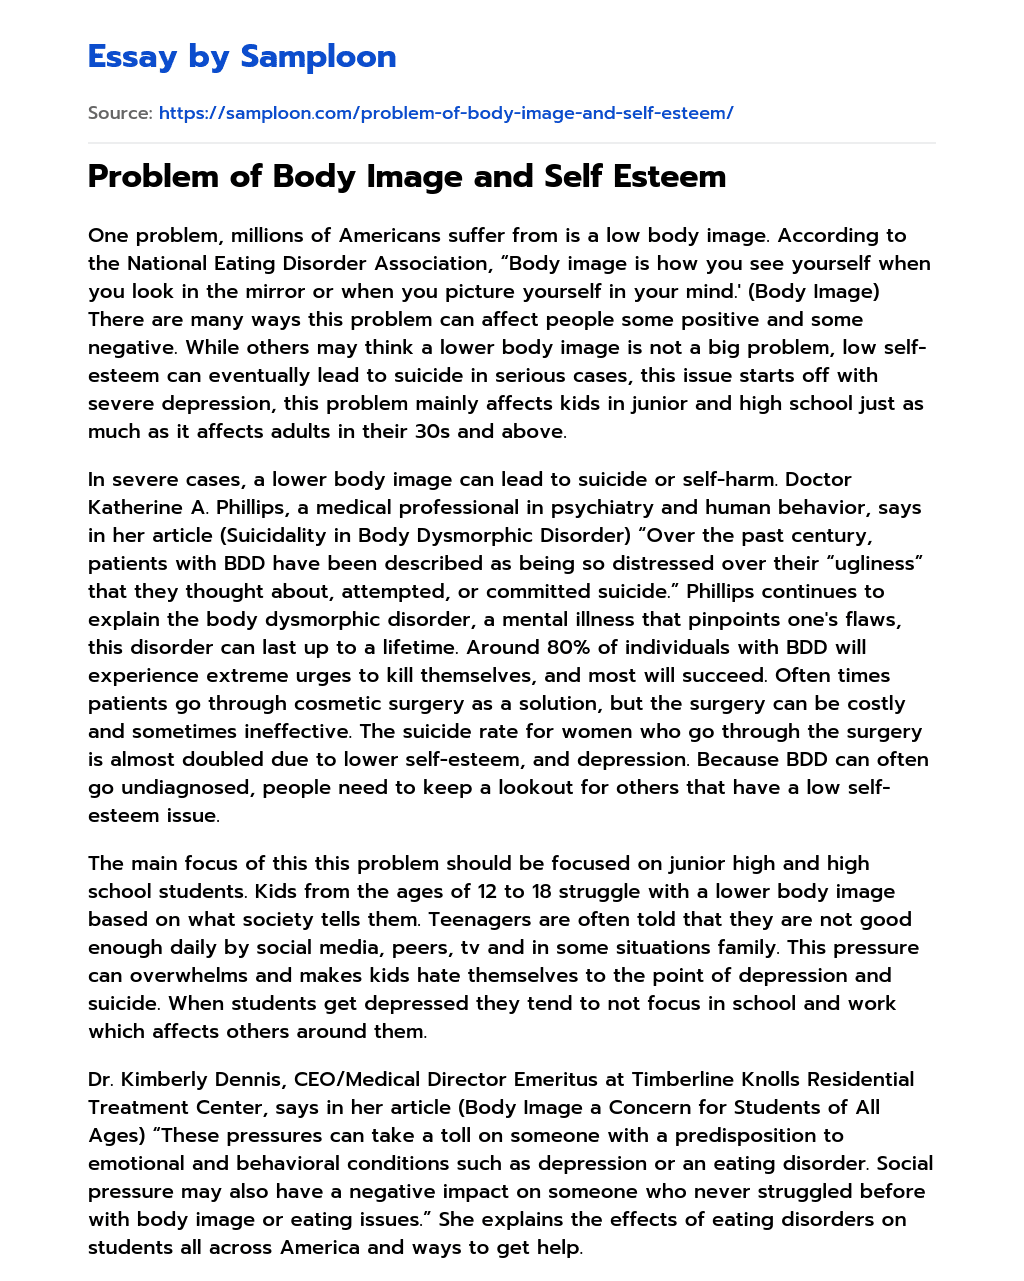 Problem of Body Image and Self Esteem essay